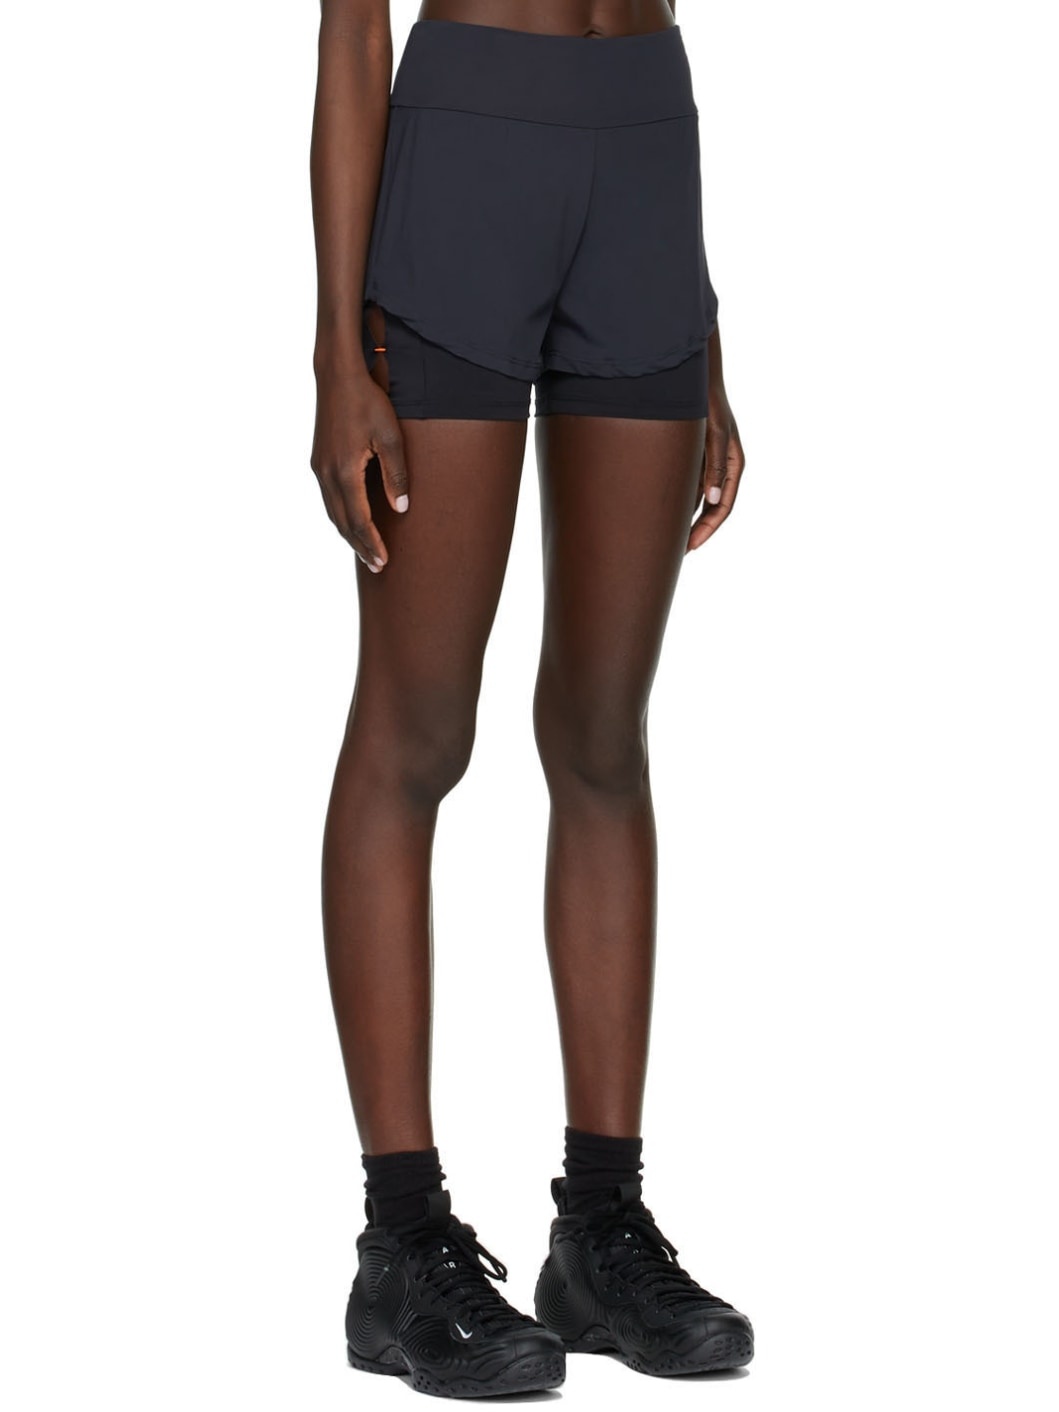 SSENSE Exclusive Black Spandex Sport Shorts - 2